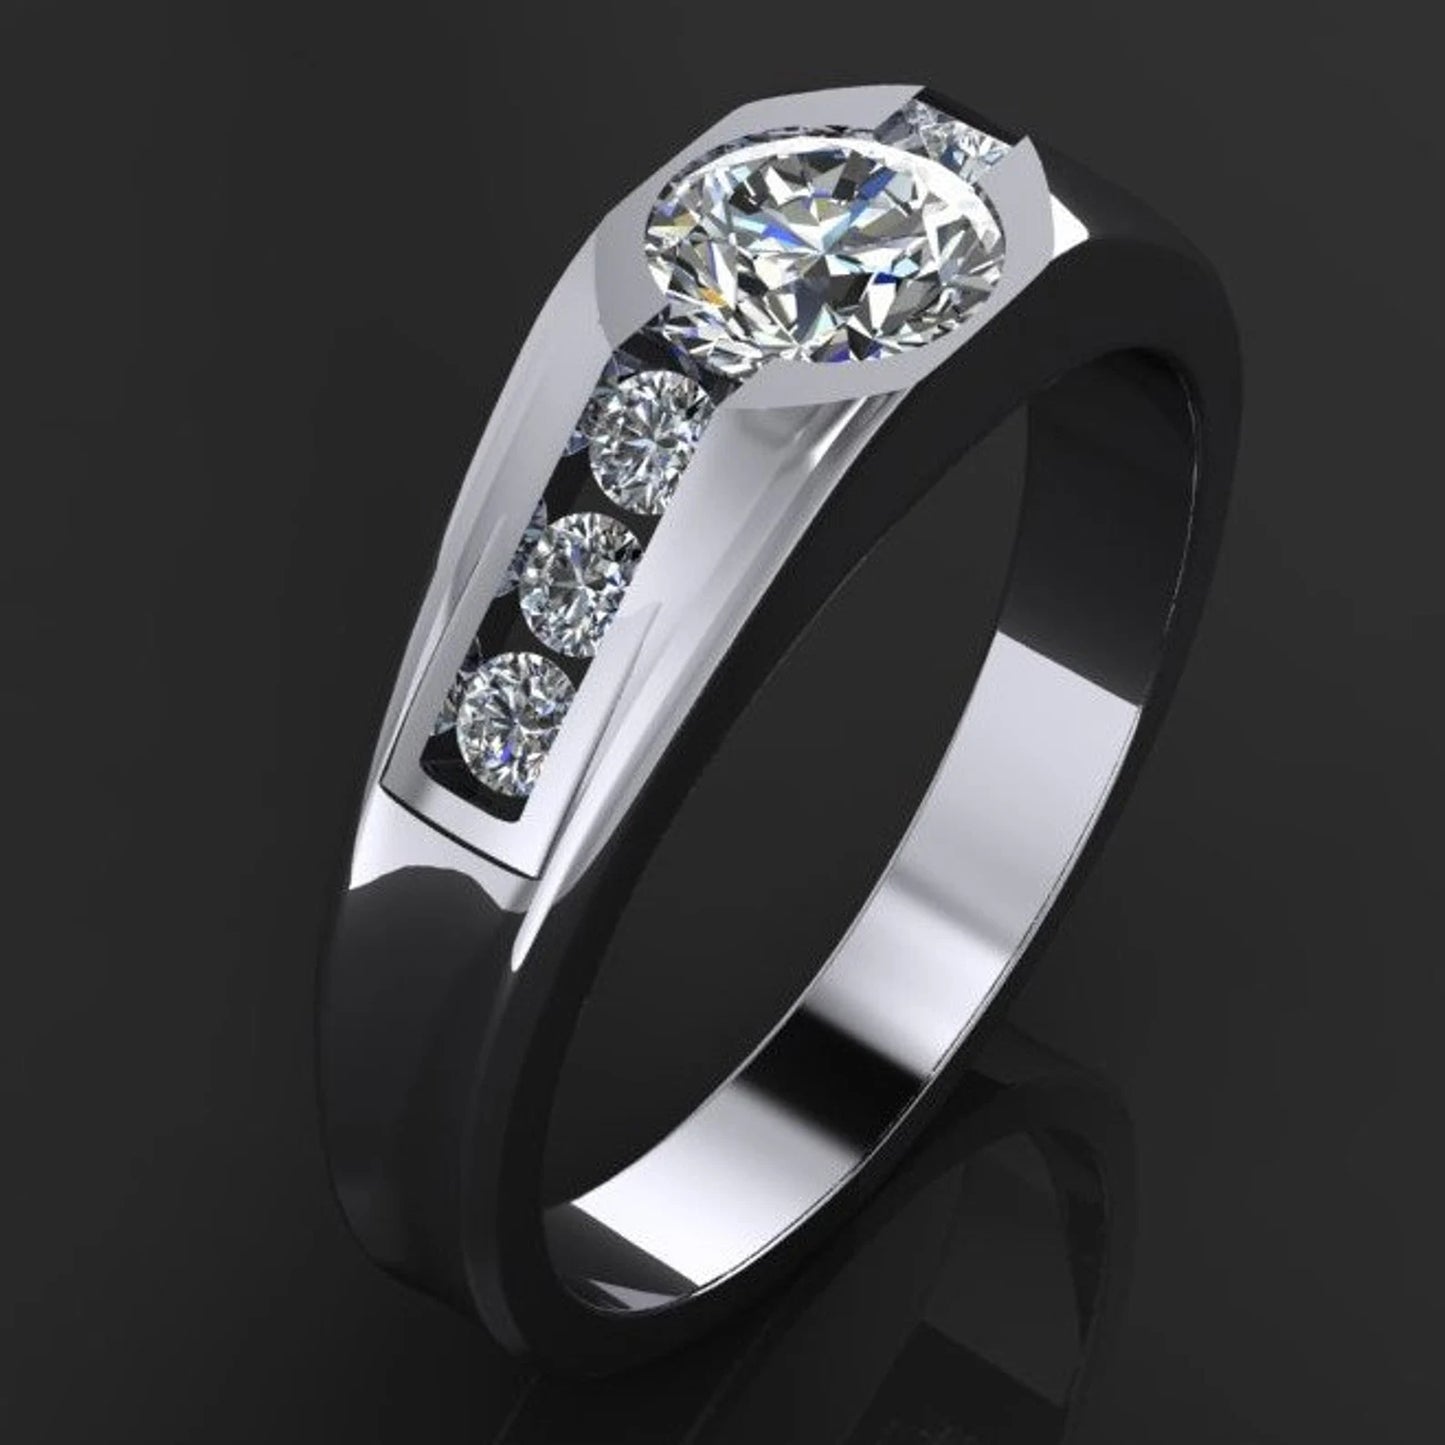 devon ring - men's gold wedding band, moissanite engagement ring - J Hollywood Designs